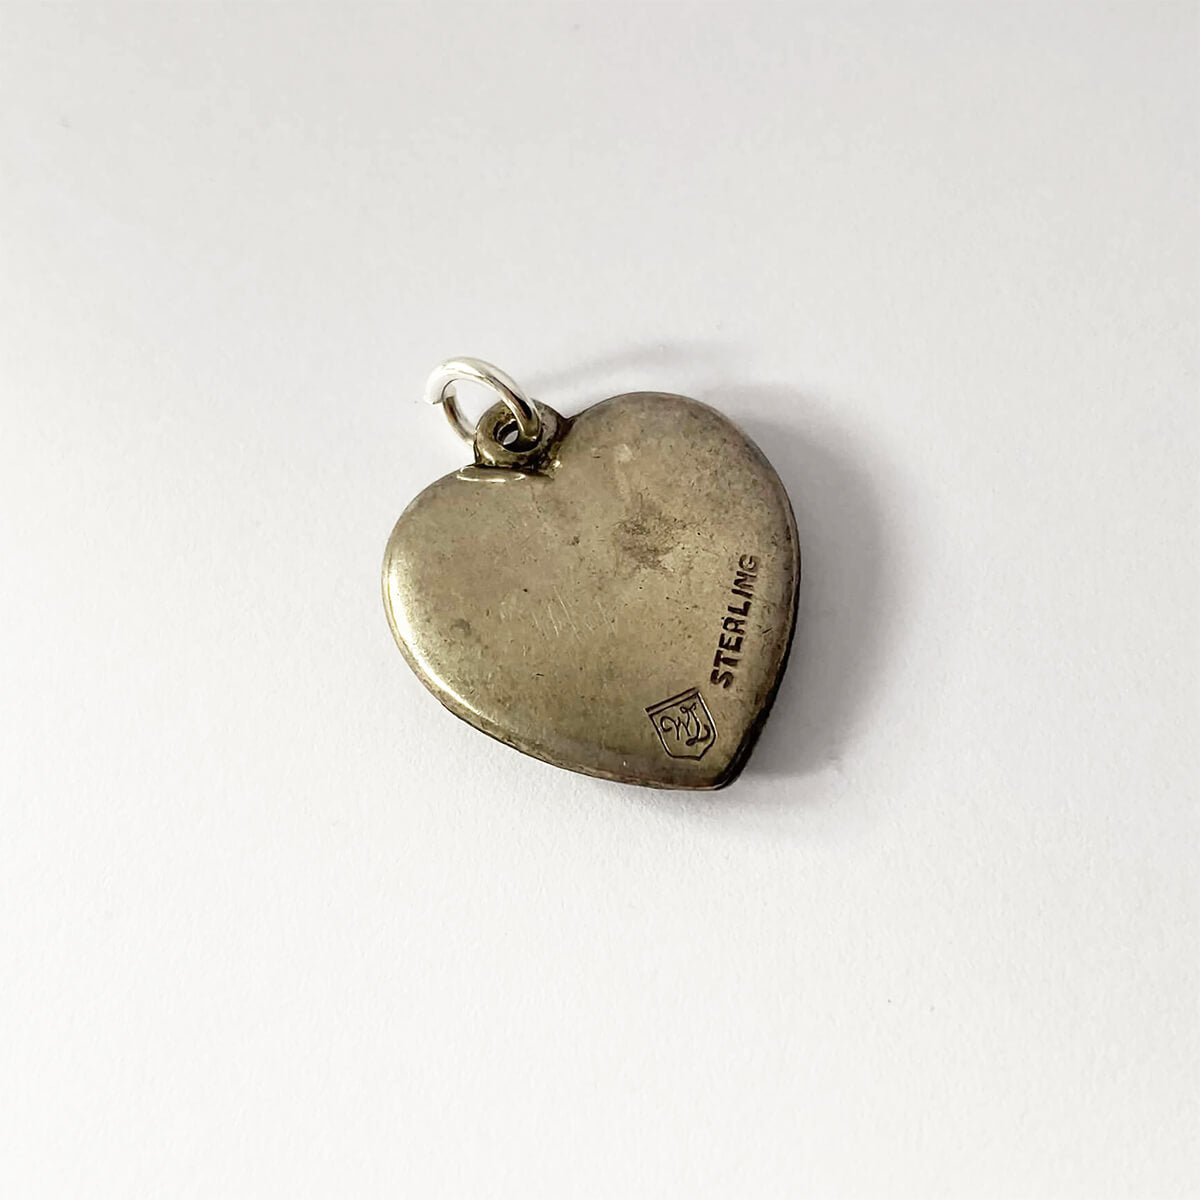 Vintage 1940s guilloche enamel sterling silver Walter Lampl puffy heart charm